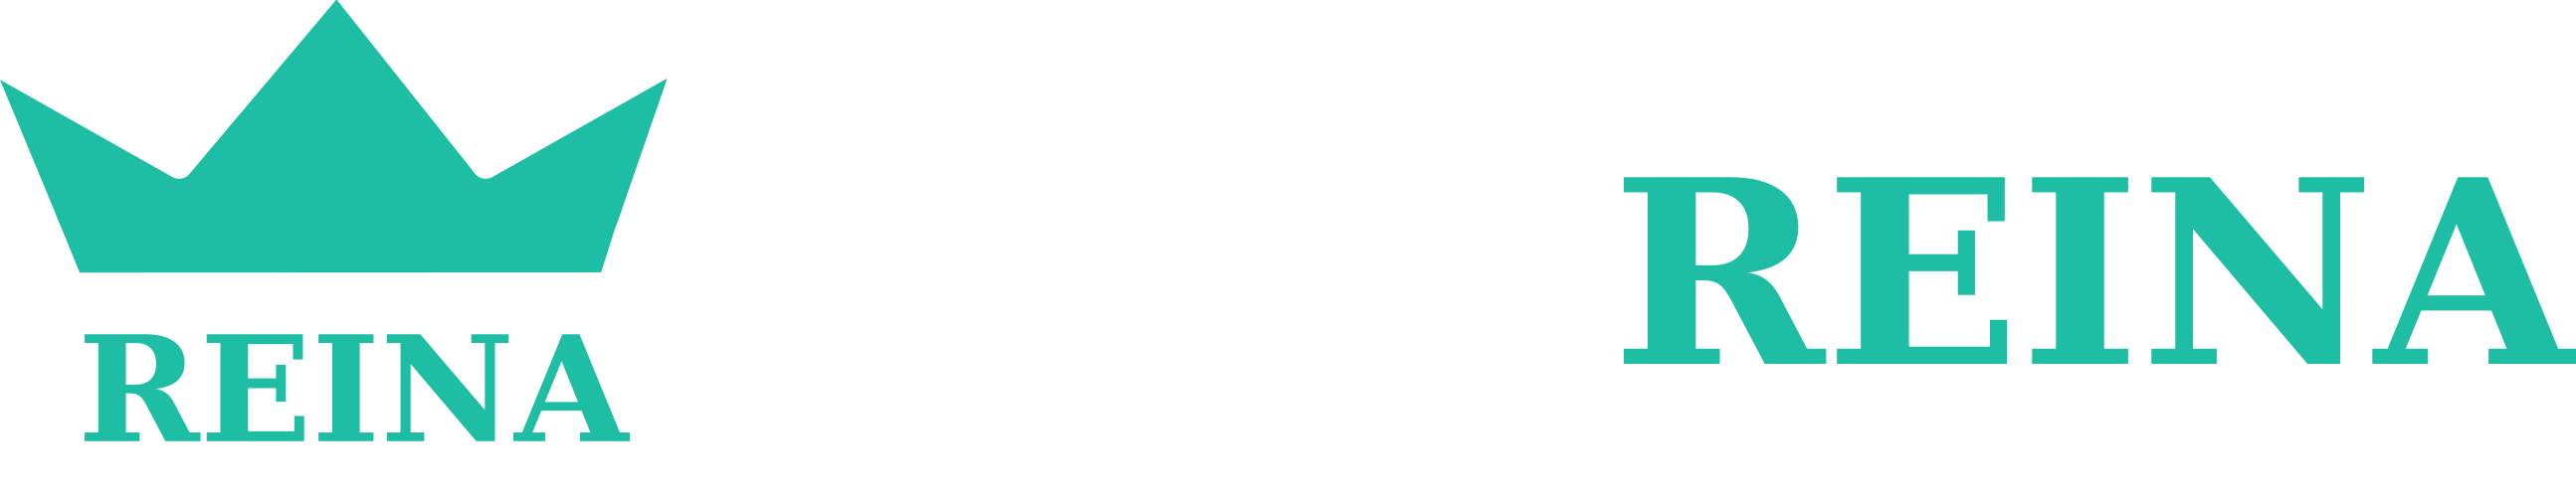 Hotel Reina